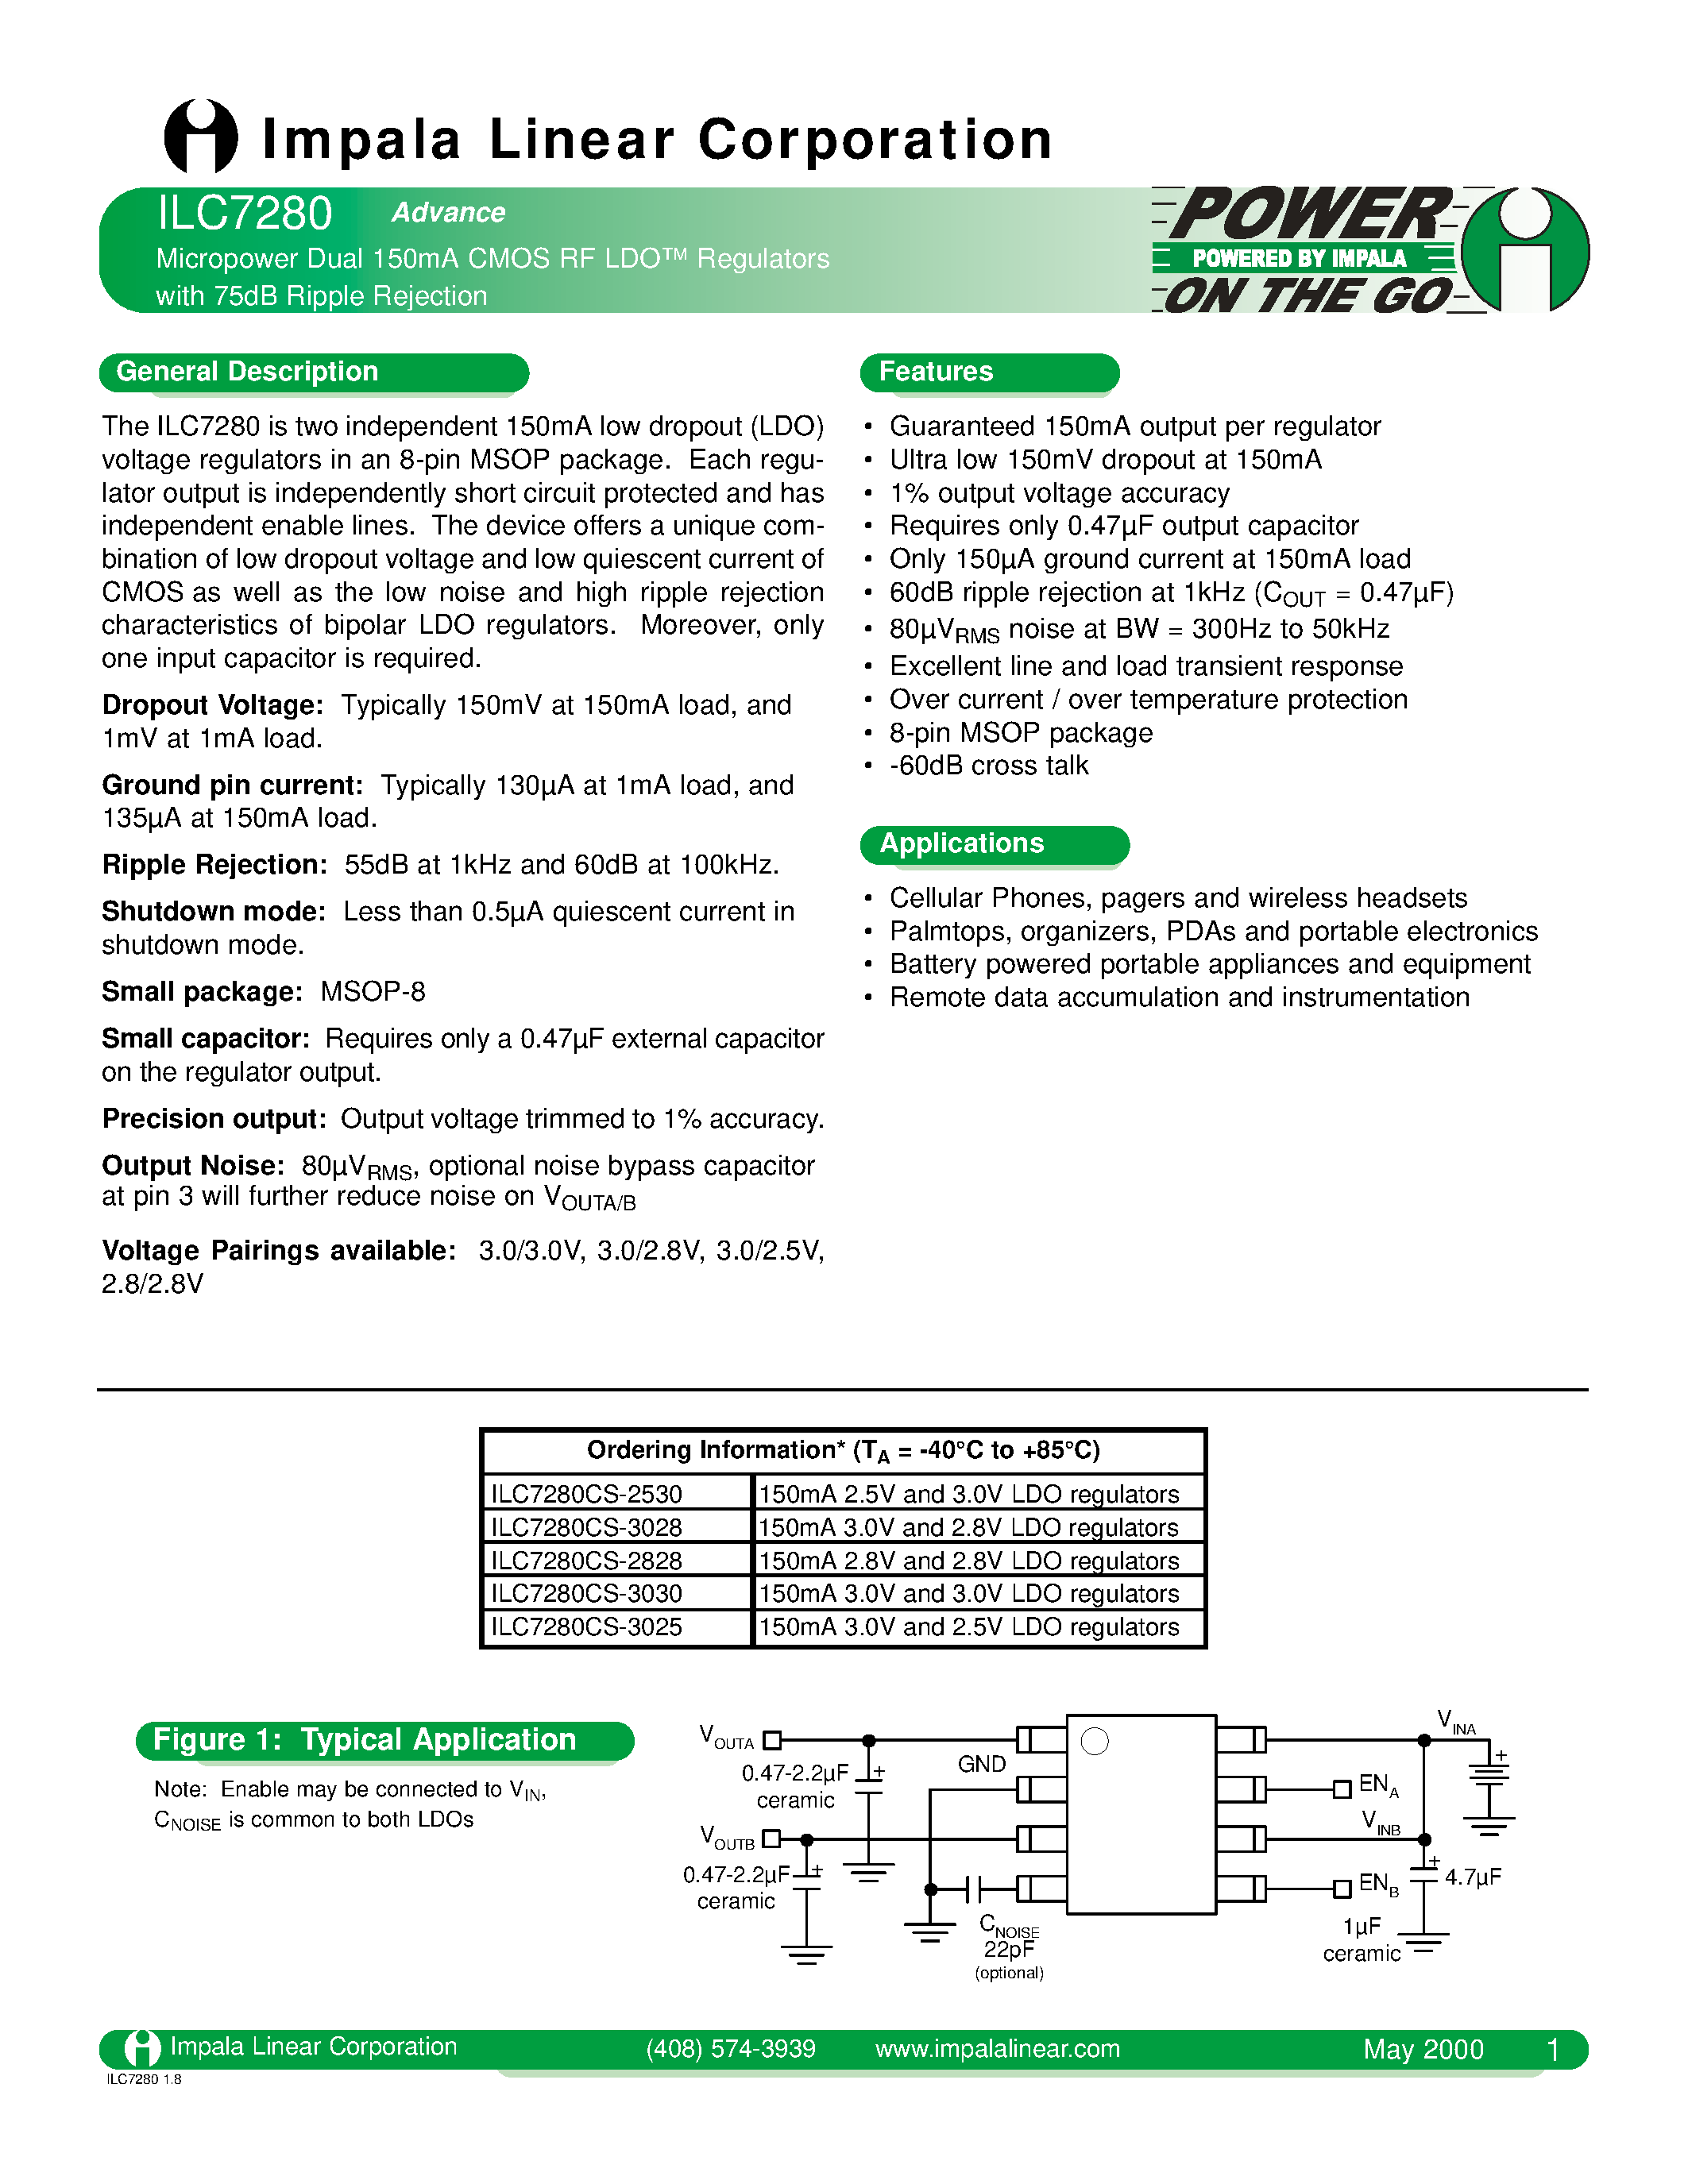 Datasheet ILC7280CS-3025 - MICROPOWER DUAL 150MA CMOS RF LDO REGULATORS WITH 75DB RIPPLE REJECTION page 1